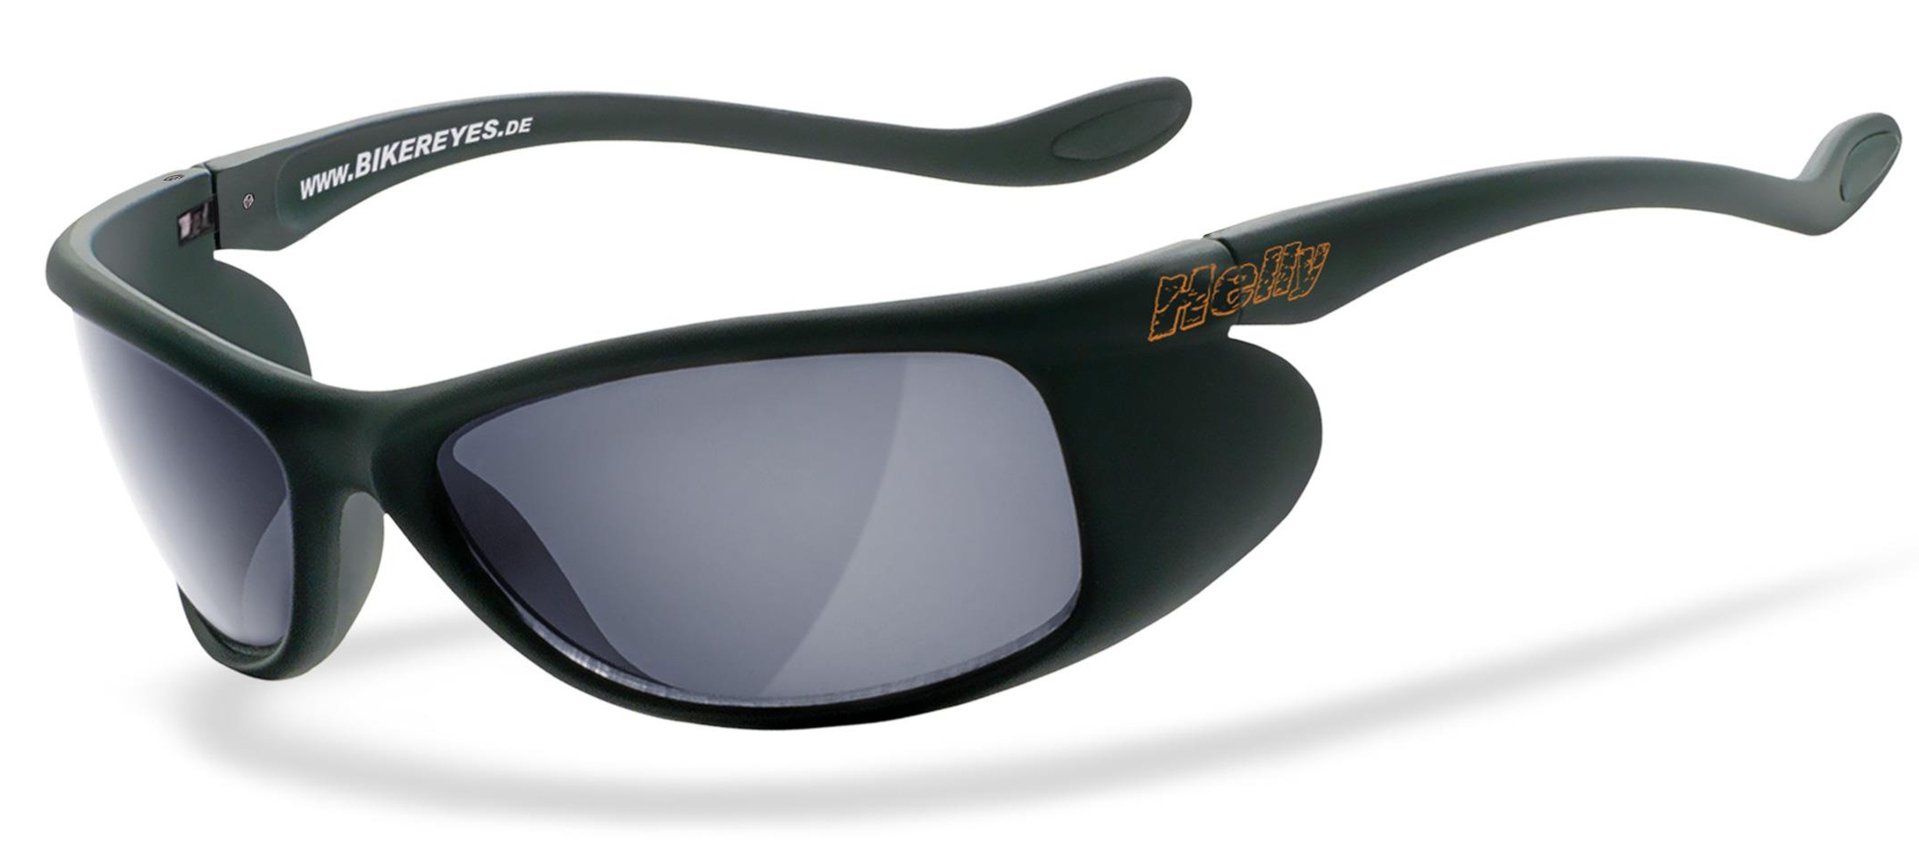 Очки Helly Bikereyes Top Speed 4 солнцезащитные, бледно синий солнцезащитные очки nano синий